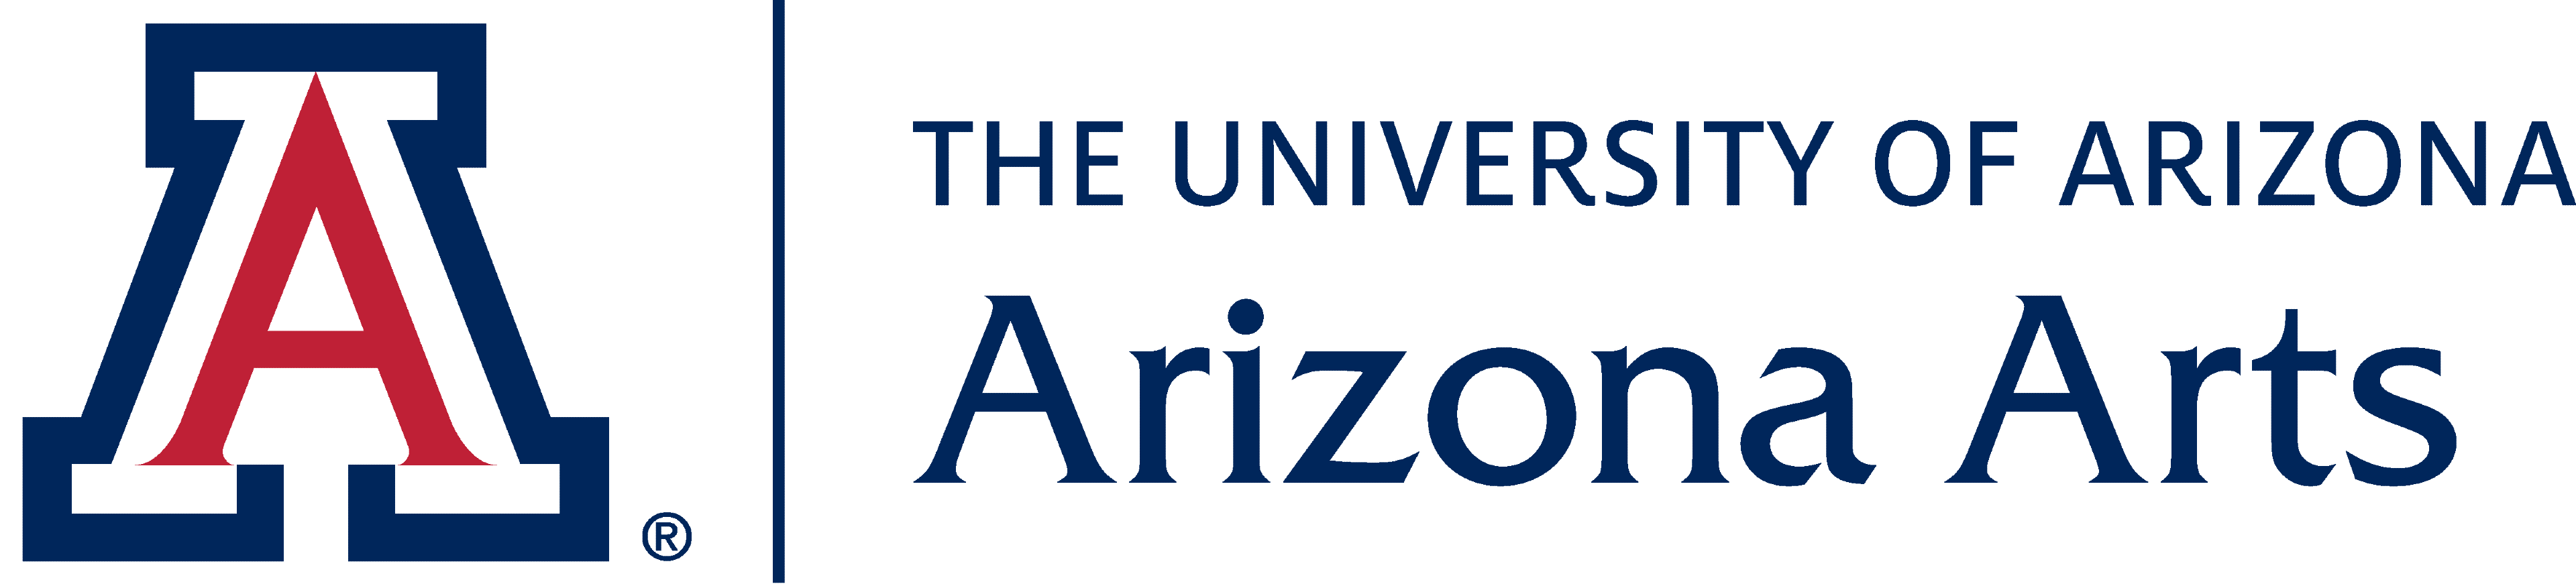 The University of Arizona - Arizona Arts